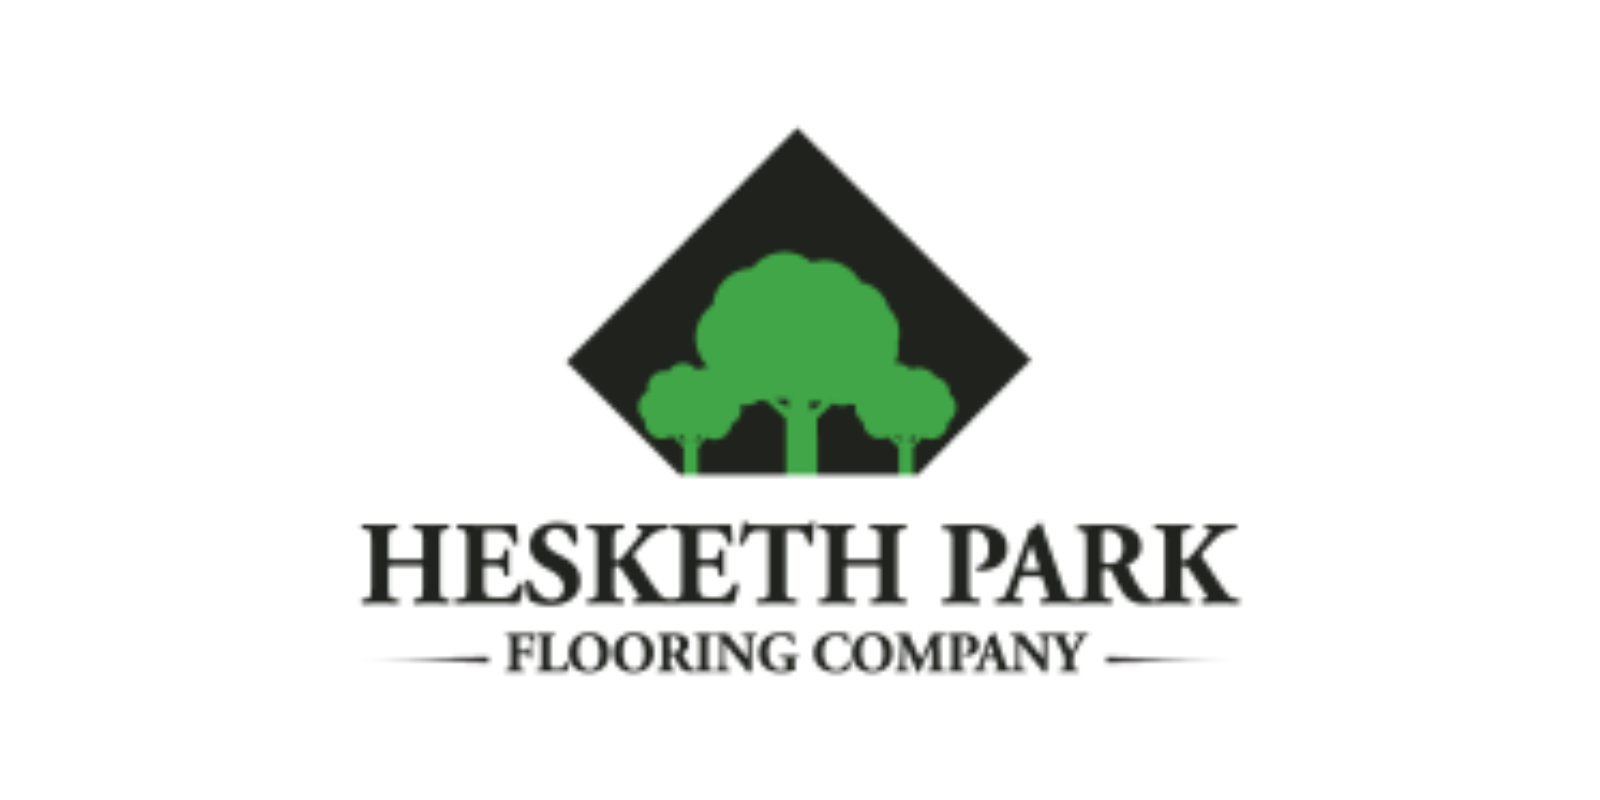 Hesketh Park Flooring Ltd